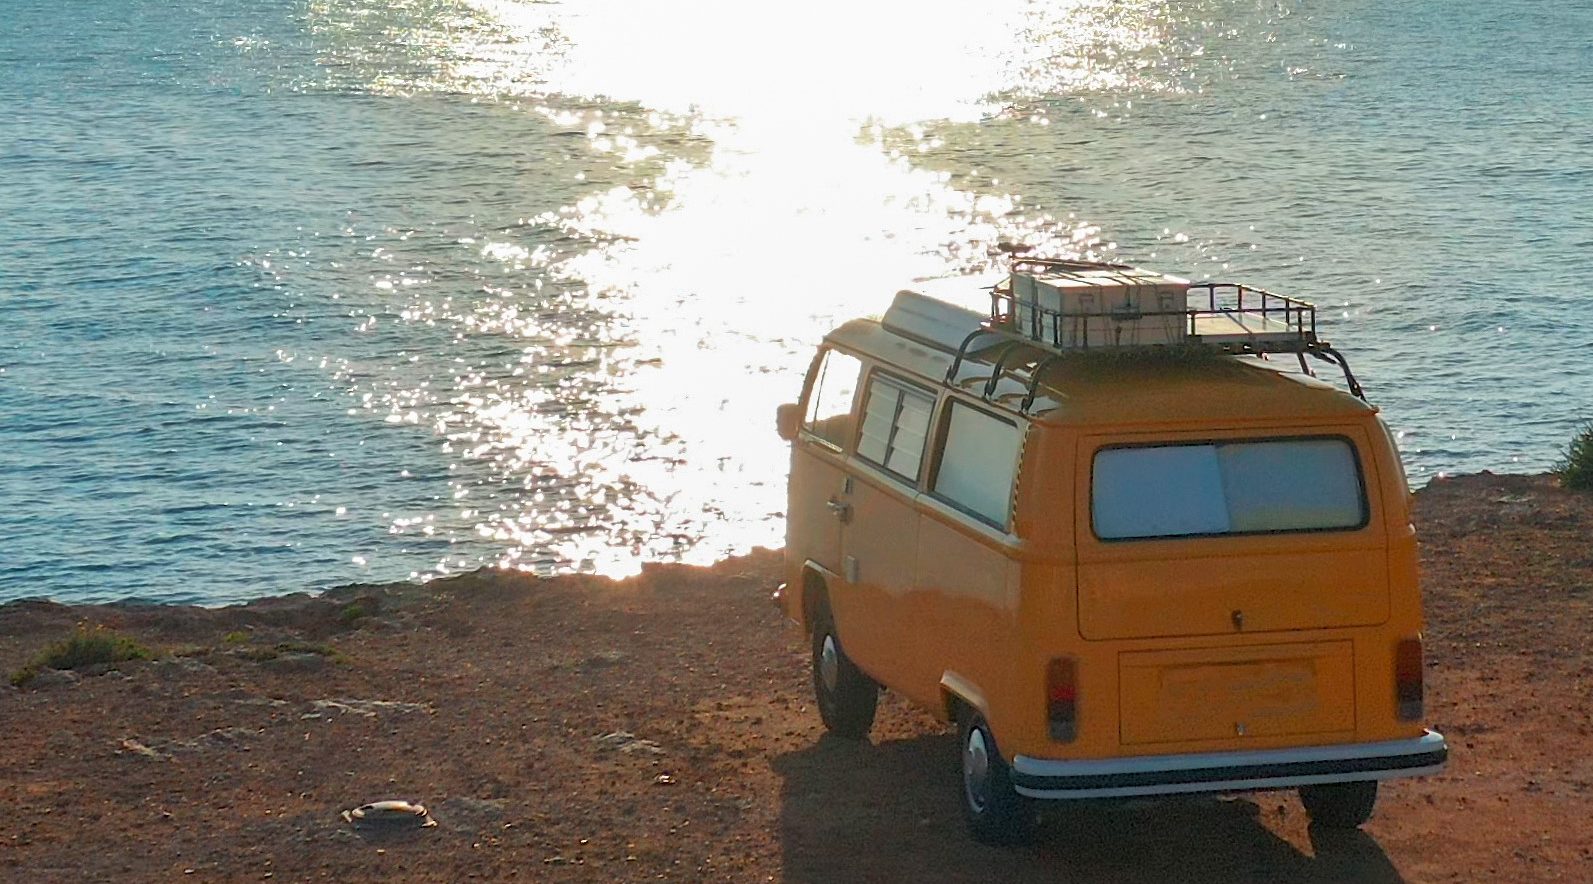 Vintage camper VW camper by the sea